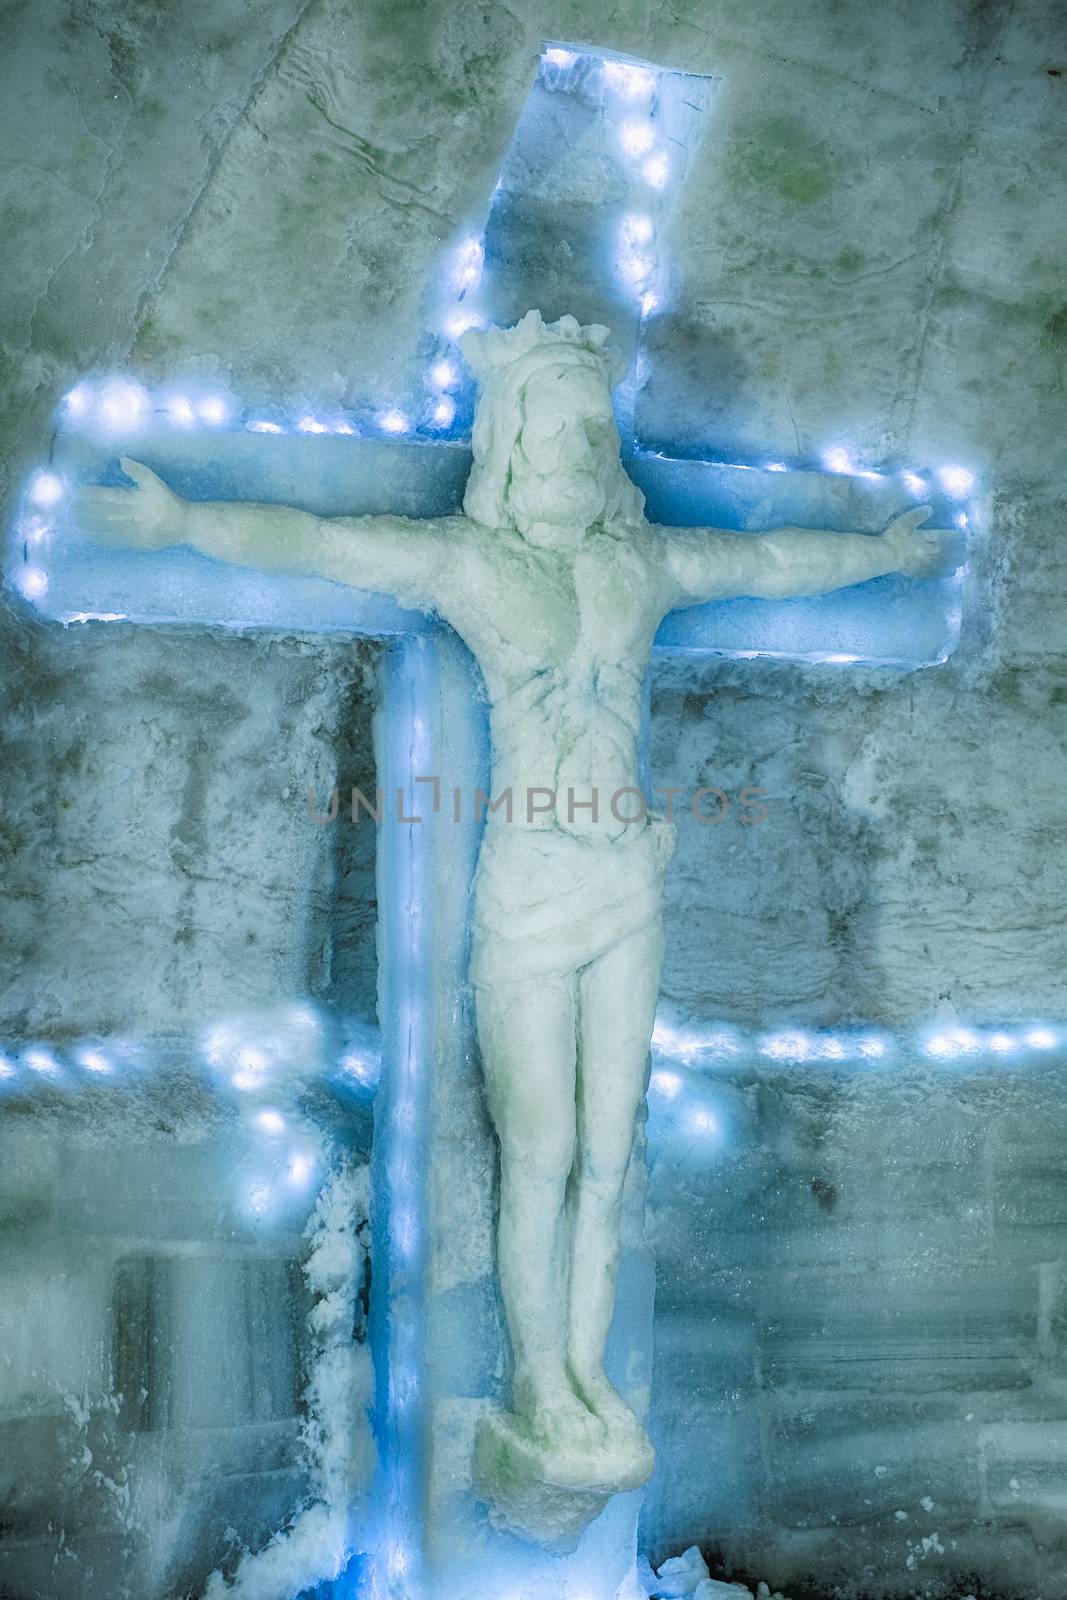 Ice Hotel - Balea Lake Romania - January 24 2019. ice sculpture represented on Jesus crucified on the cross in the ice hotel on the frozen glacier Balea lake in Fagaras Mountains, Transylvania, Romania